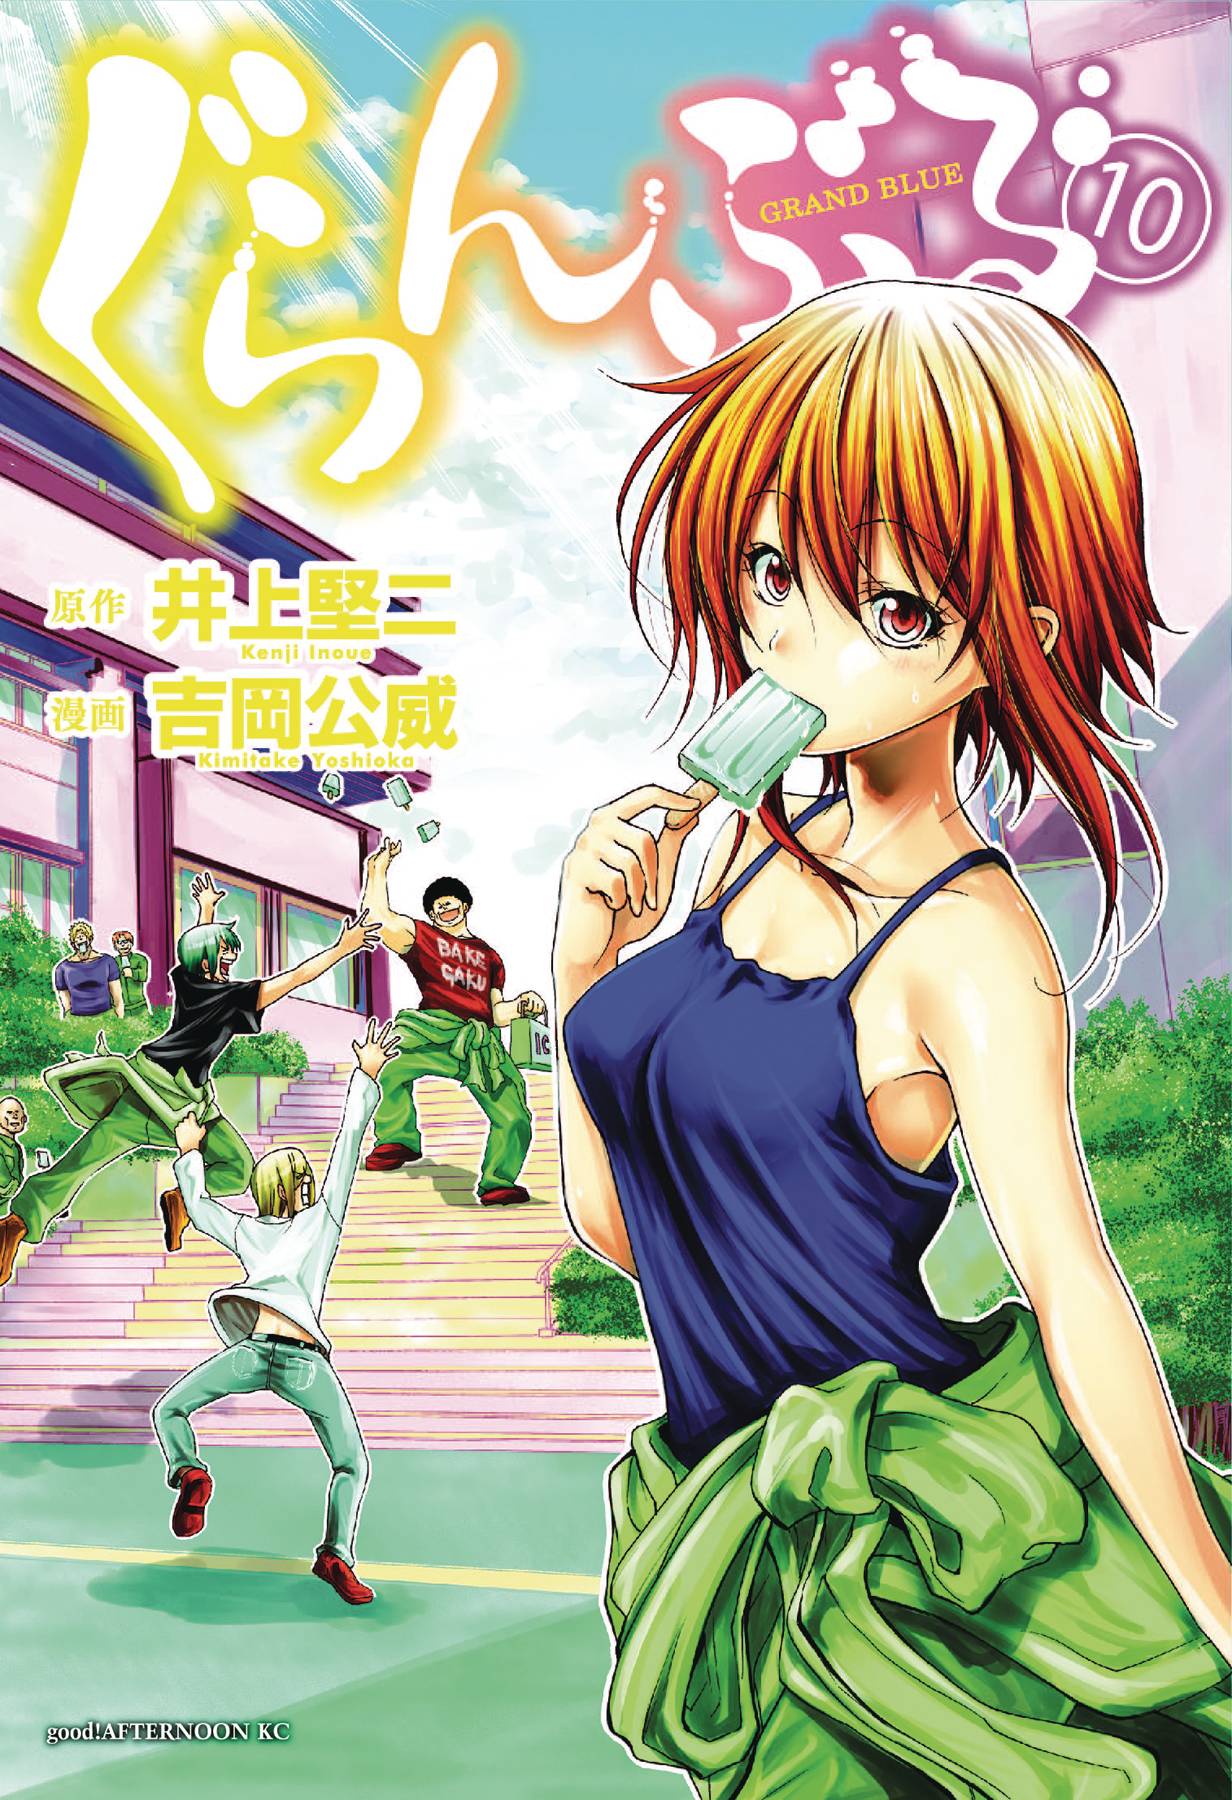 Grand Blue Dreaming Manga Volume 10 (Mature)